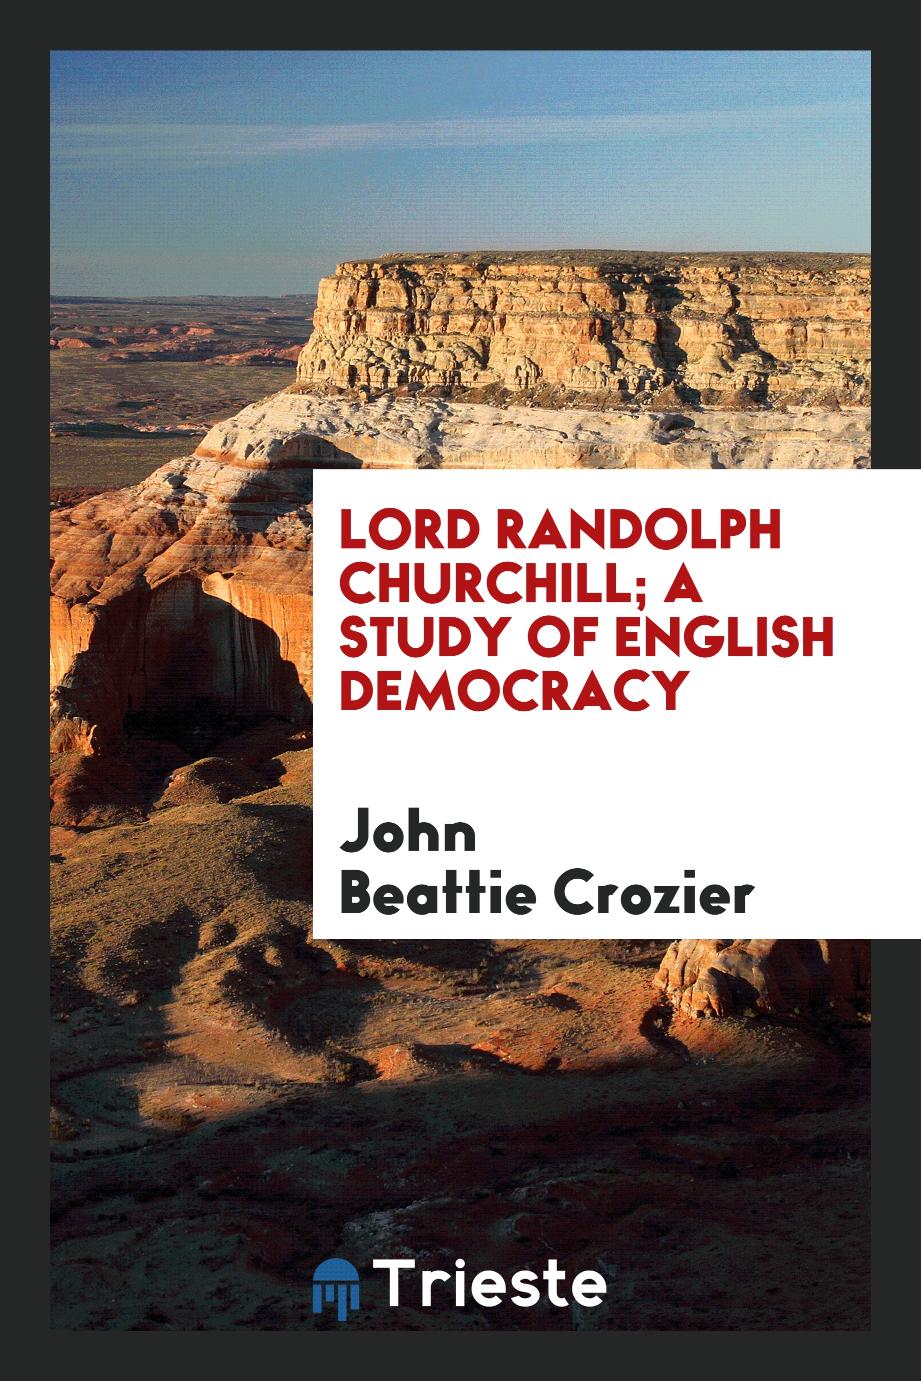 Lord Randolph Churchill; a study of English democracy